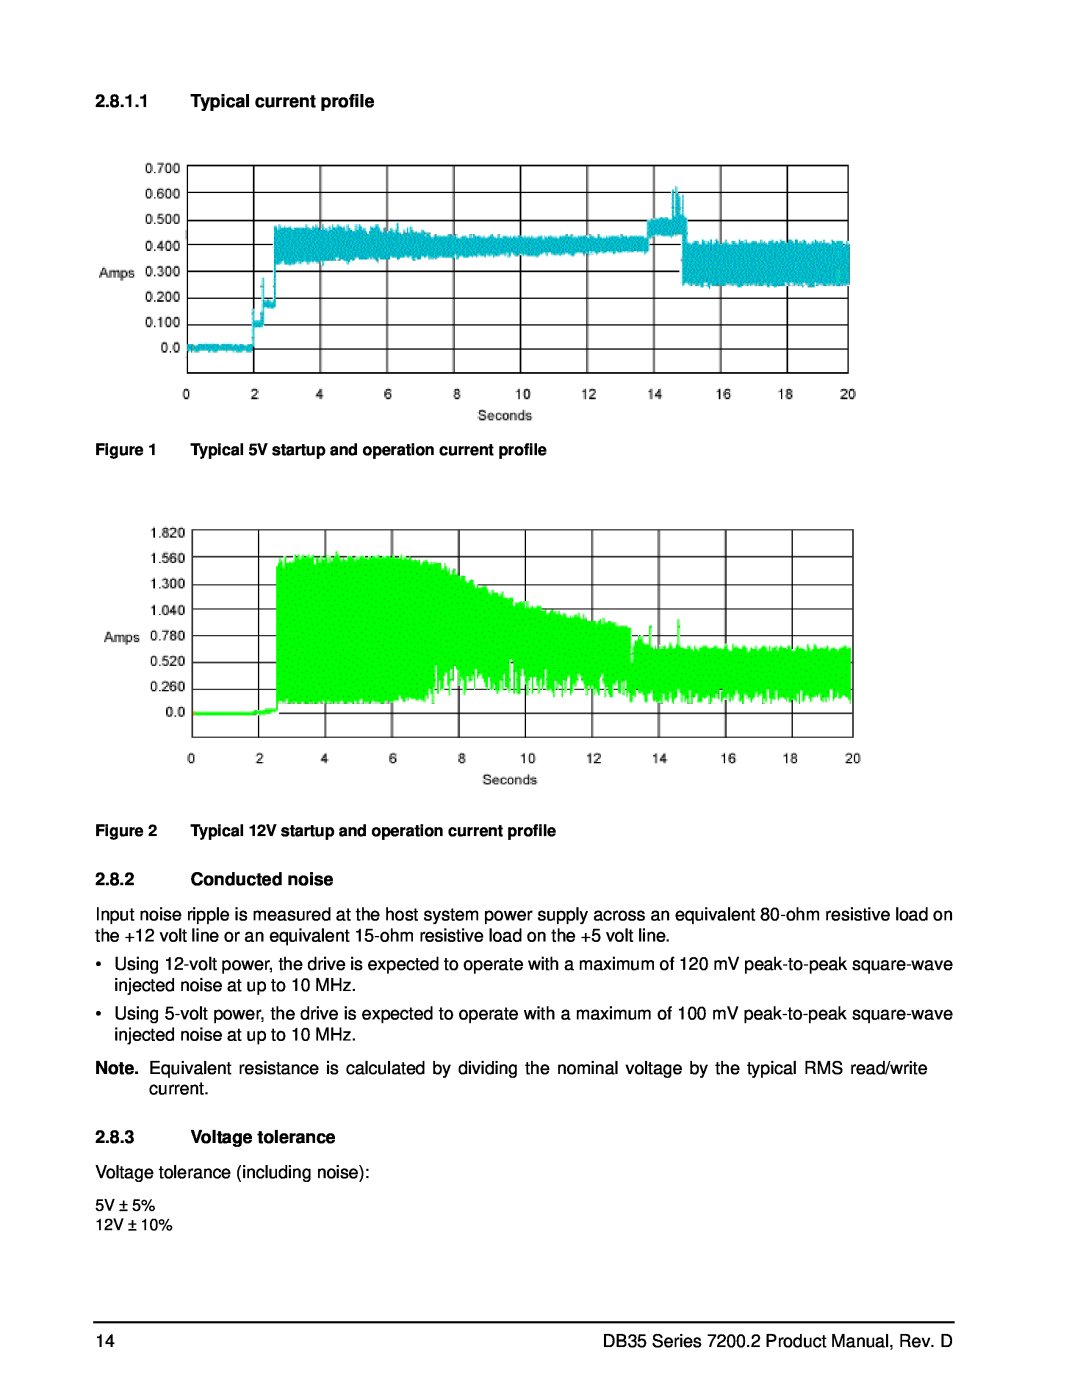 Seagate ST3300822ACE, ST3120213ACE, ST3160212ACE, ST3200827ACE Typical current profile, Conducted noise, Voltage tolerance 